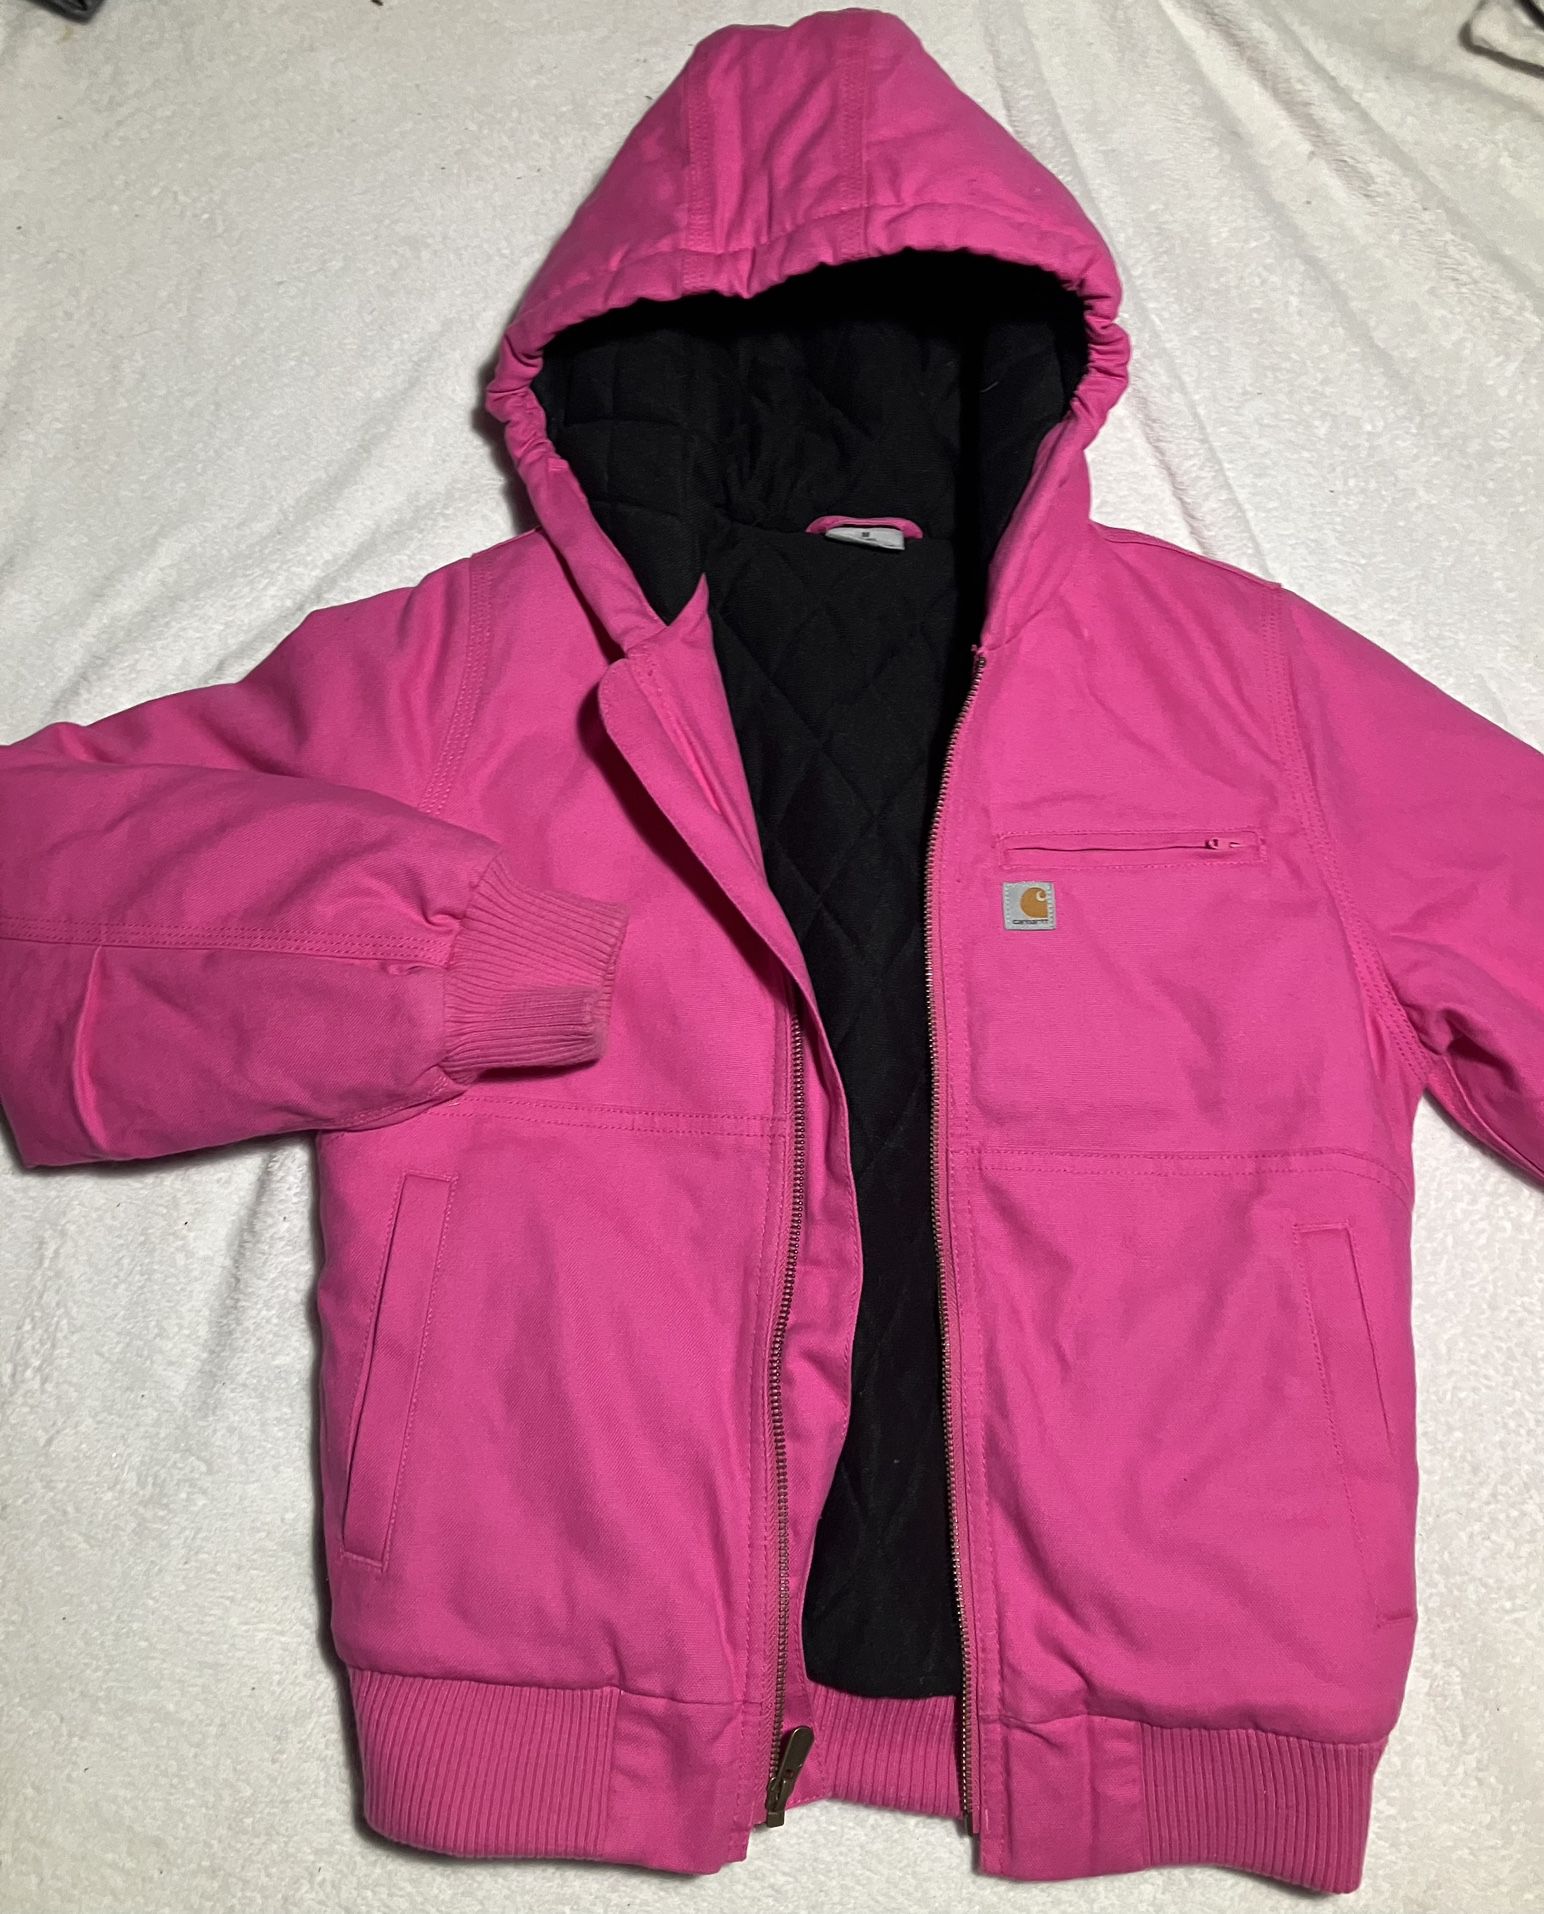 Carharrt Girl Jacket Size Medium (10-12) Great Condition 